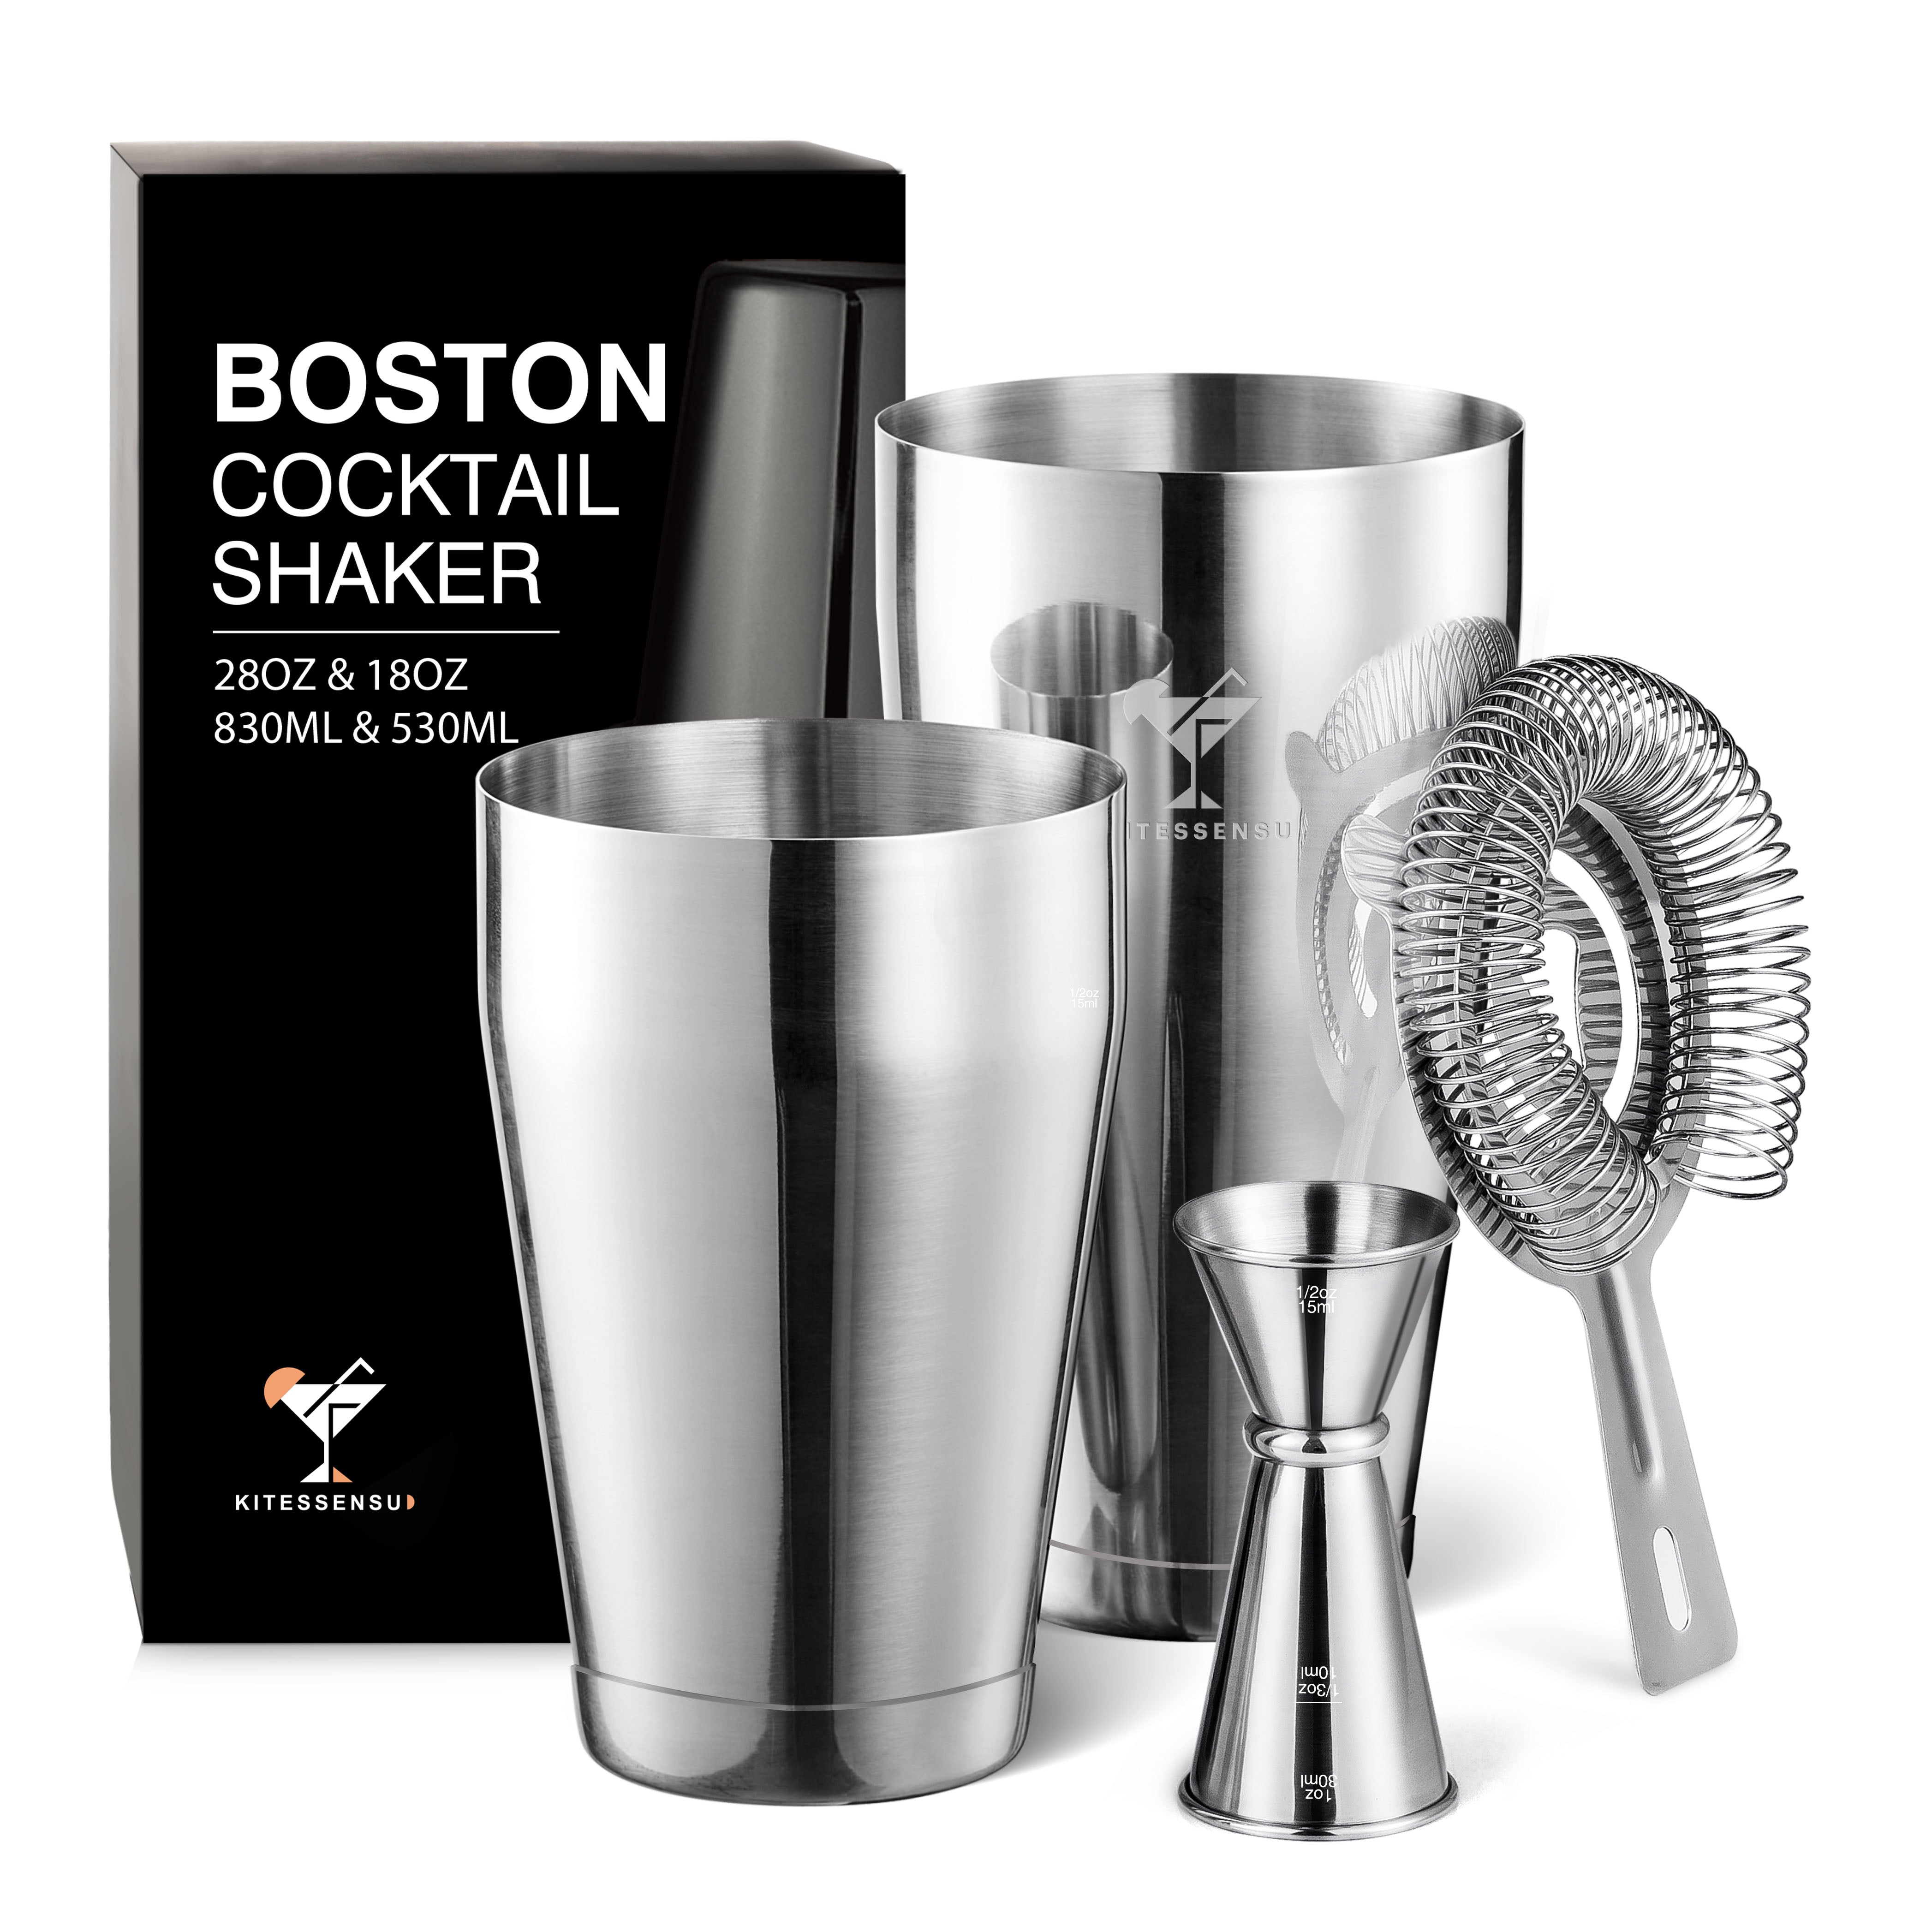 Boston Cocktail Shaker 3-Piece Sets